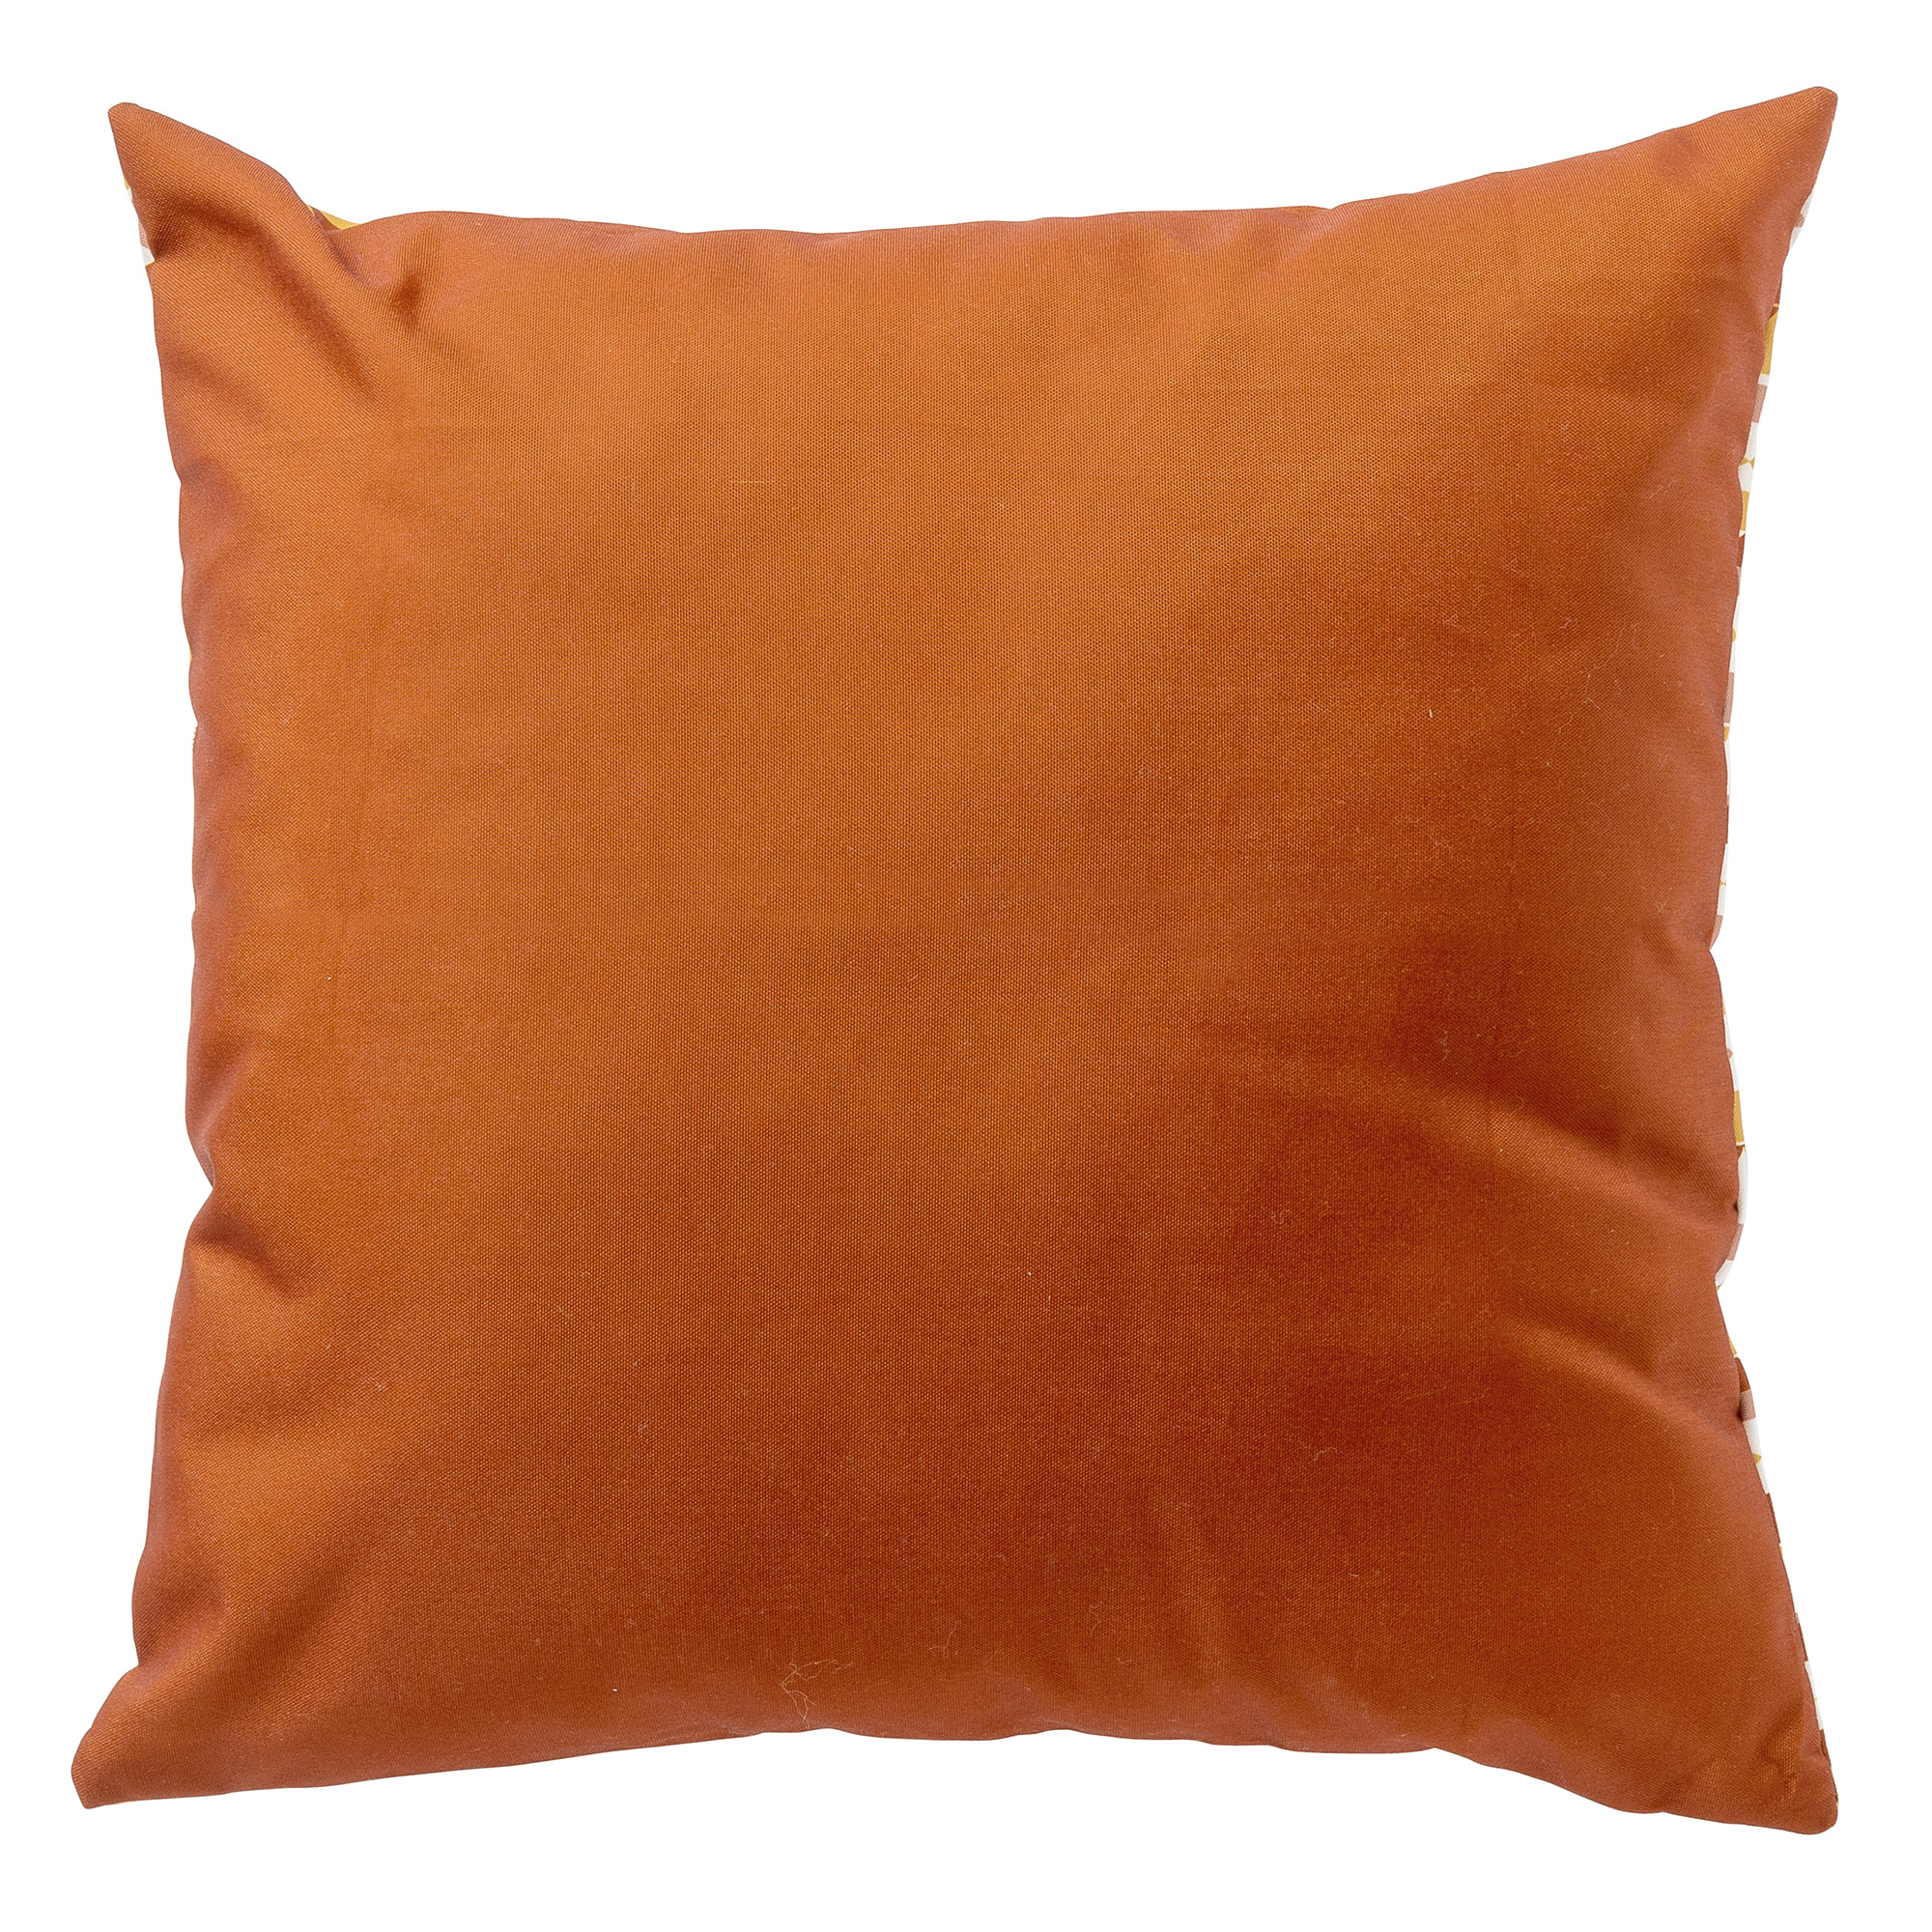 MAURO - Outdoor Kissenhülle 45x45 cm Potters Clay - orange | Kissenbezug |  DDL0712302004